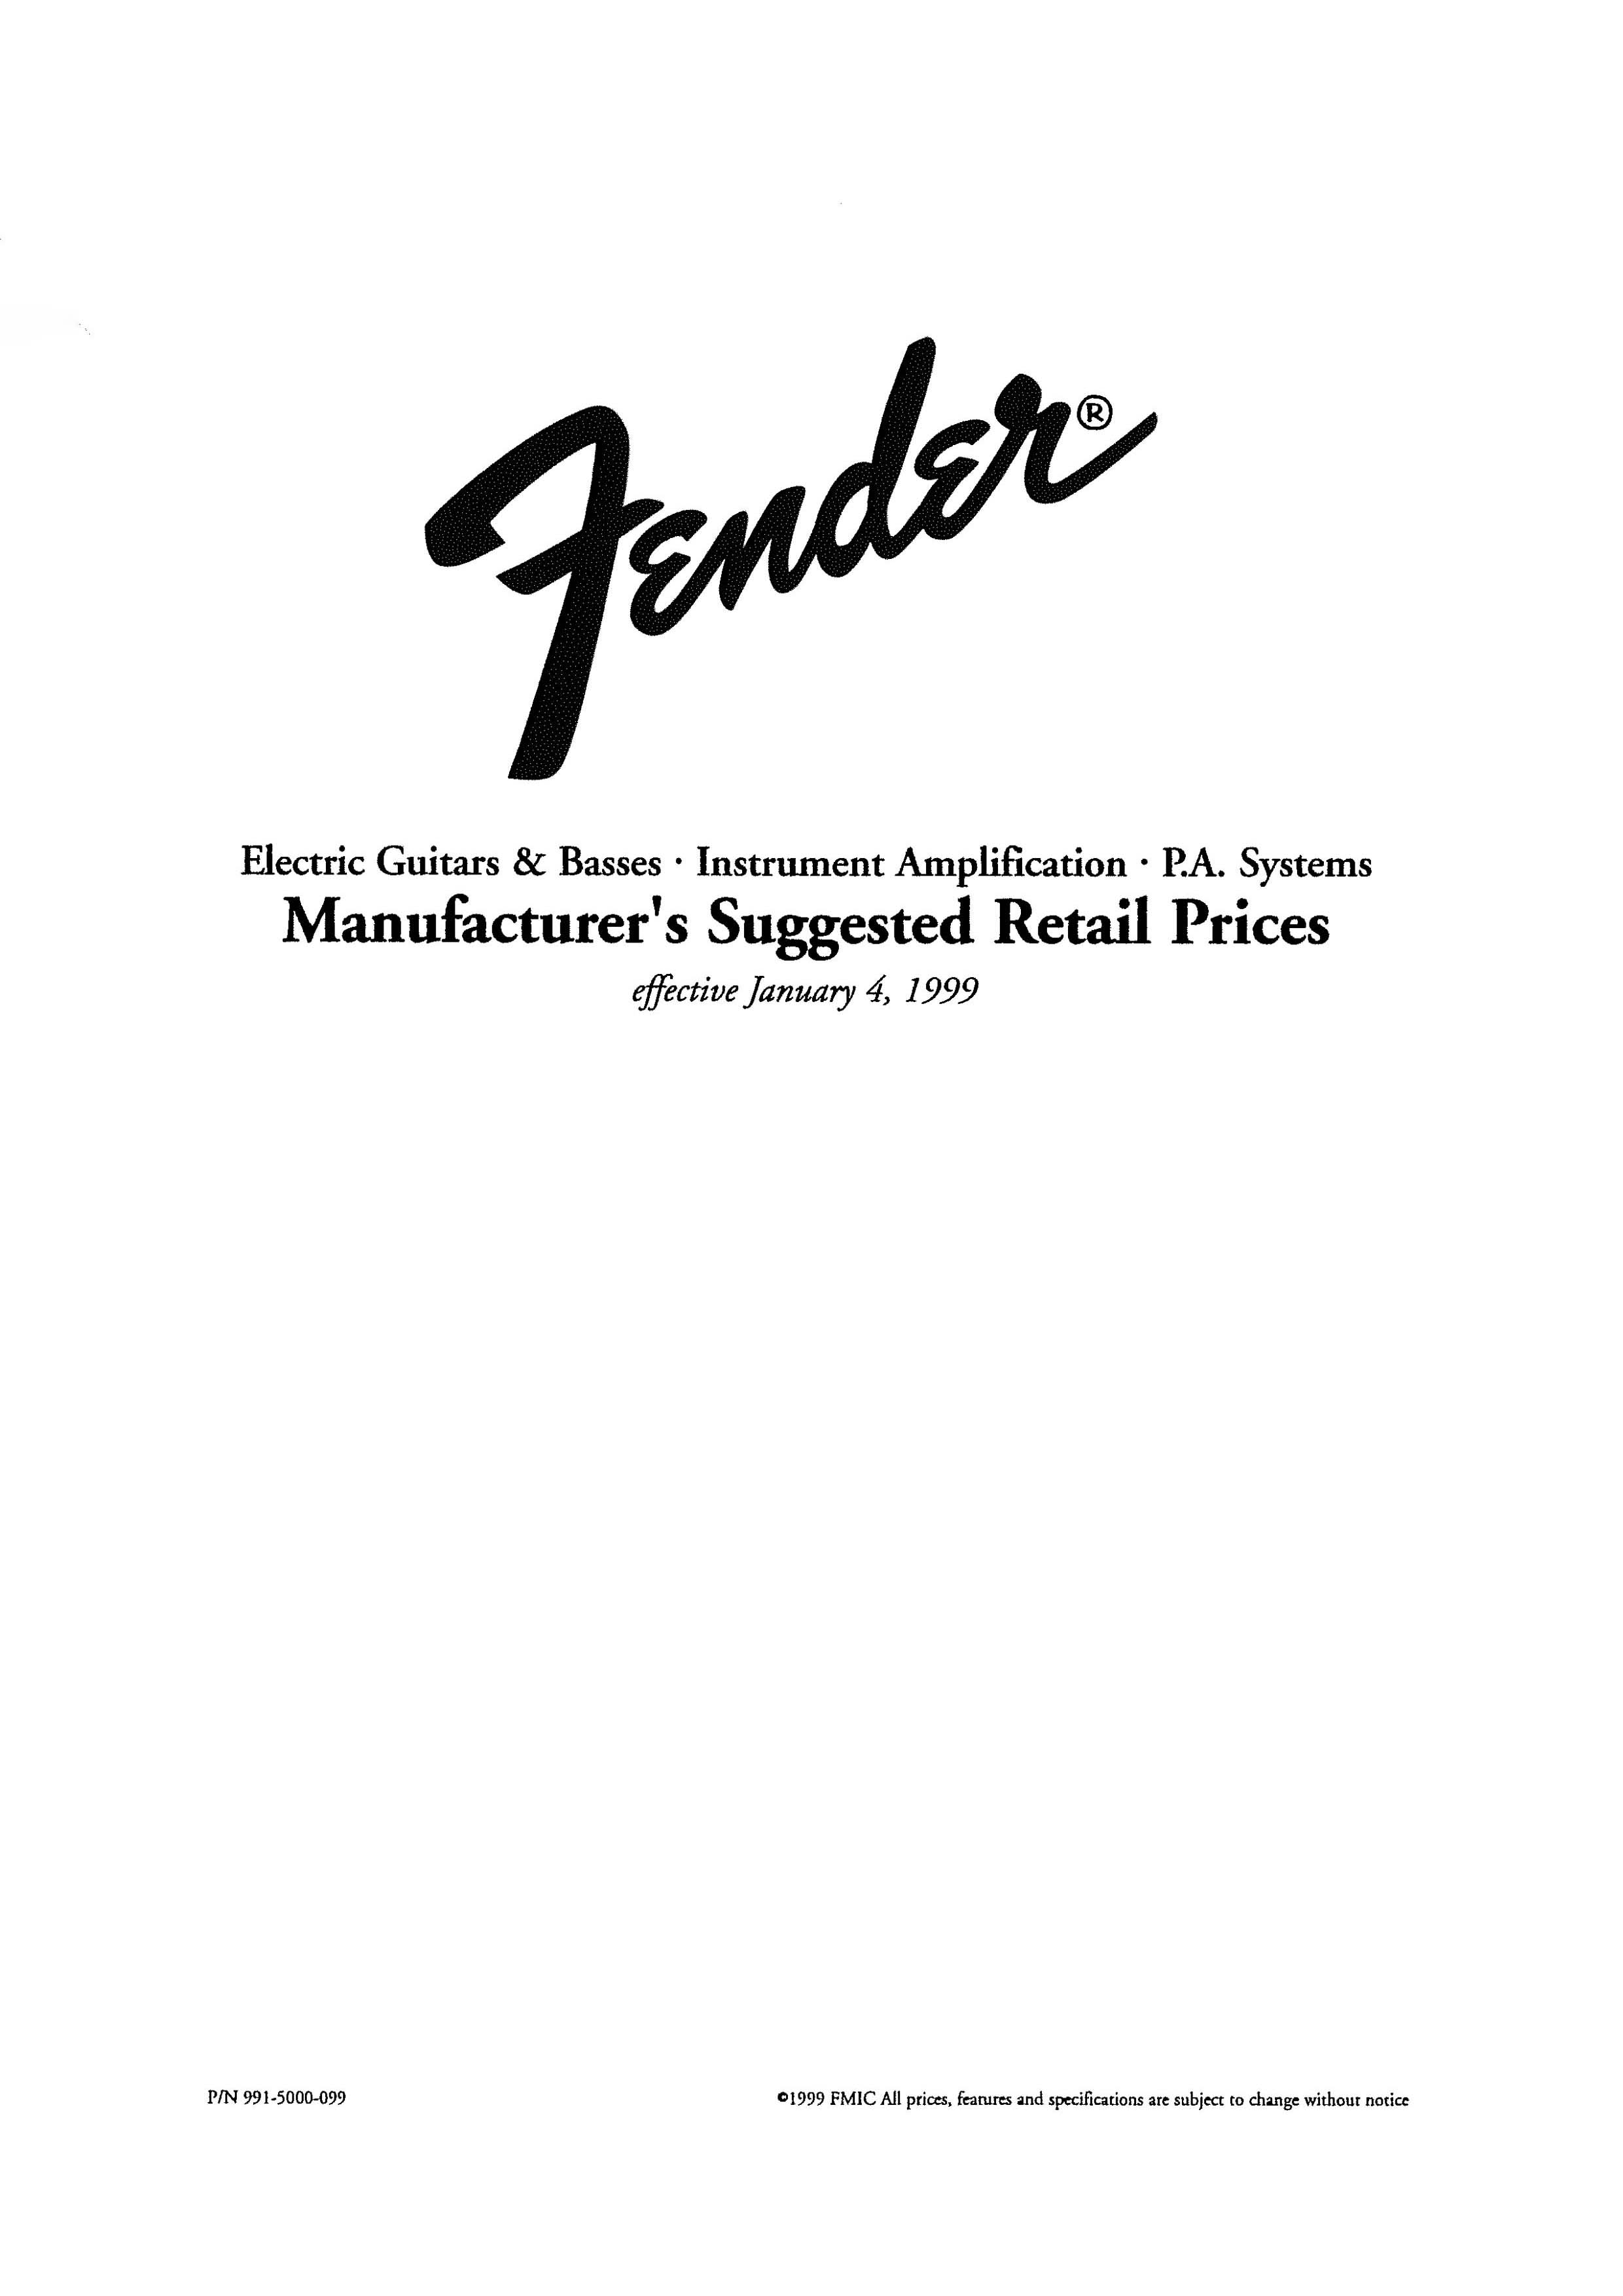 Fender Price list 1999